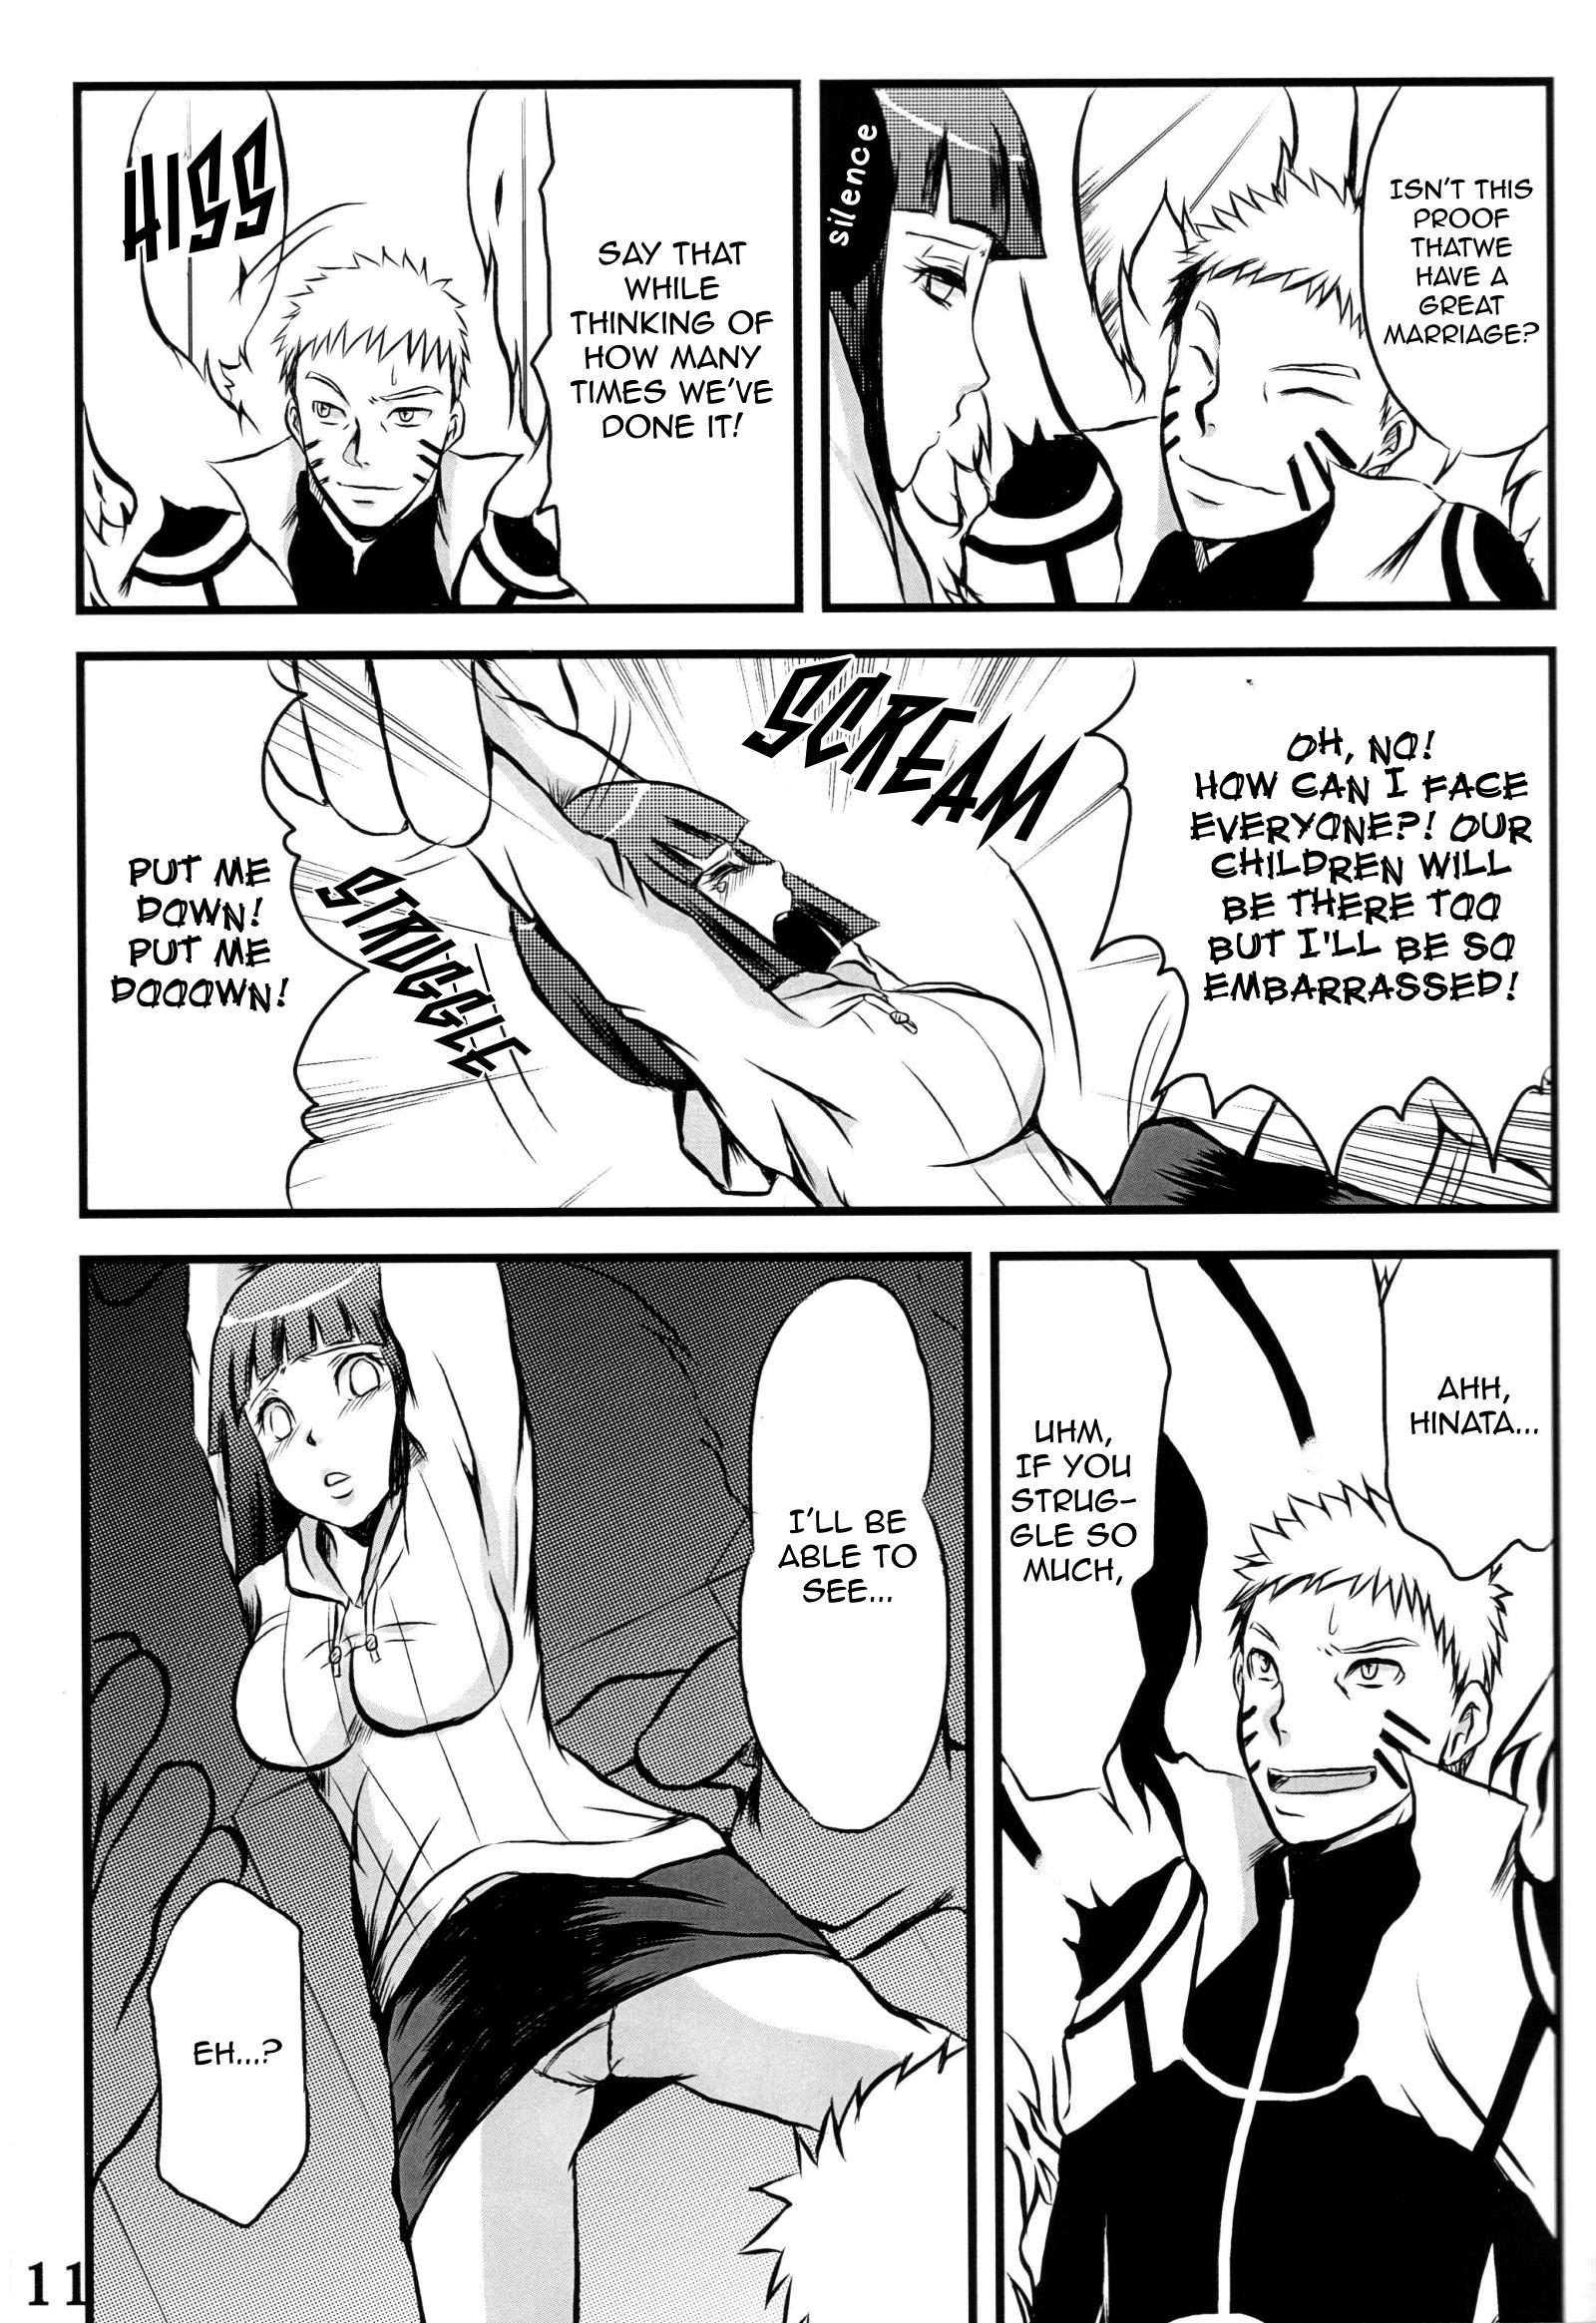 Rola Nine IX - Naruto Jacking Off - Page 10